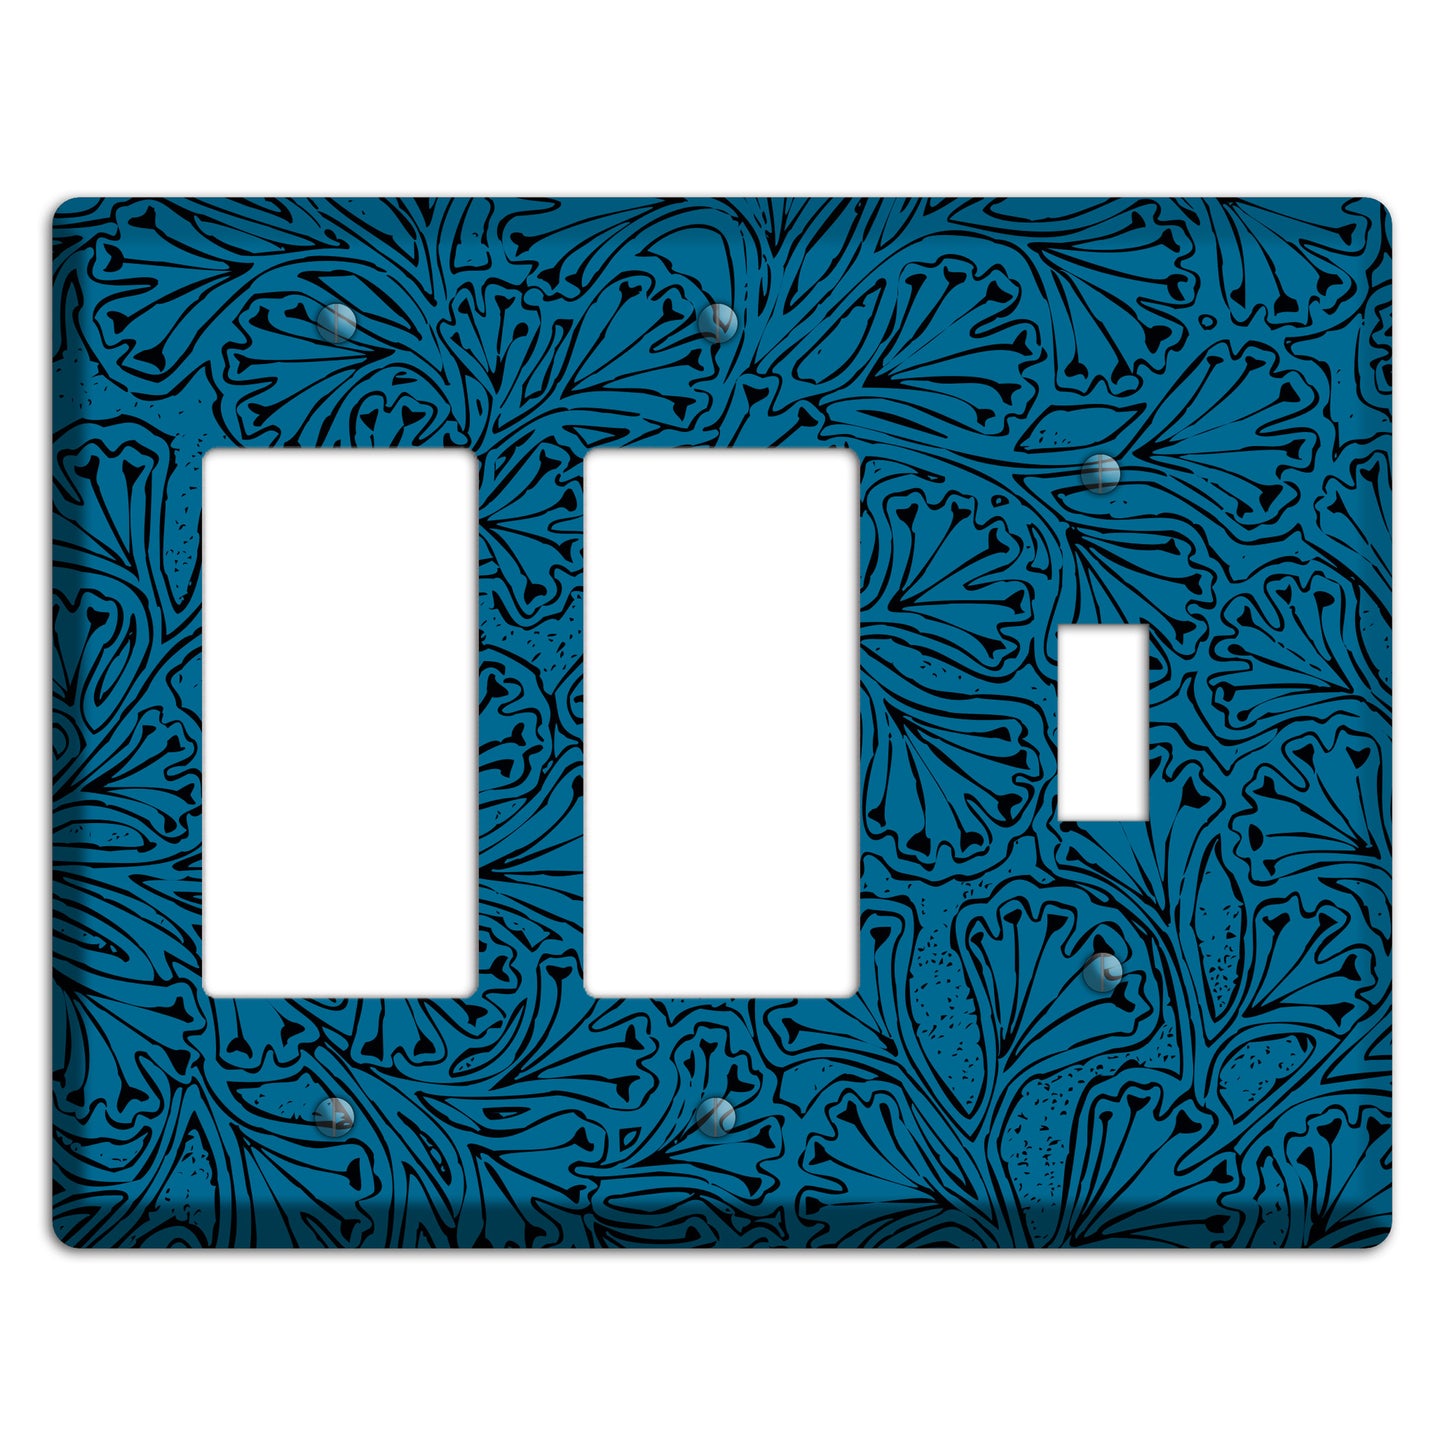 Deco Blue Interlocking Floral 2 Rocker / Toggle Wallplate